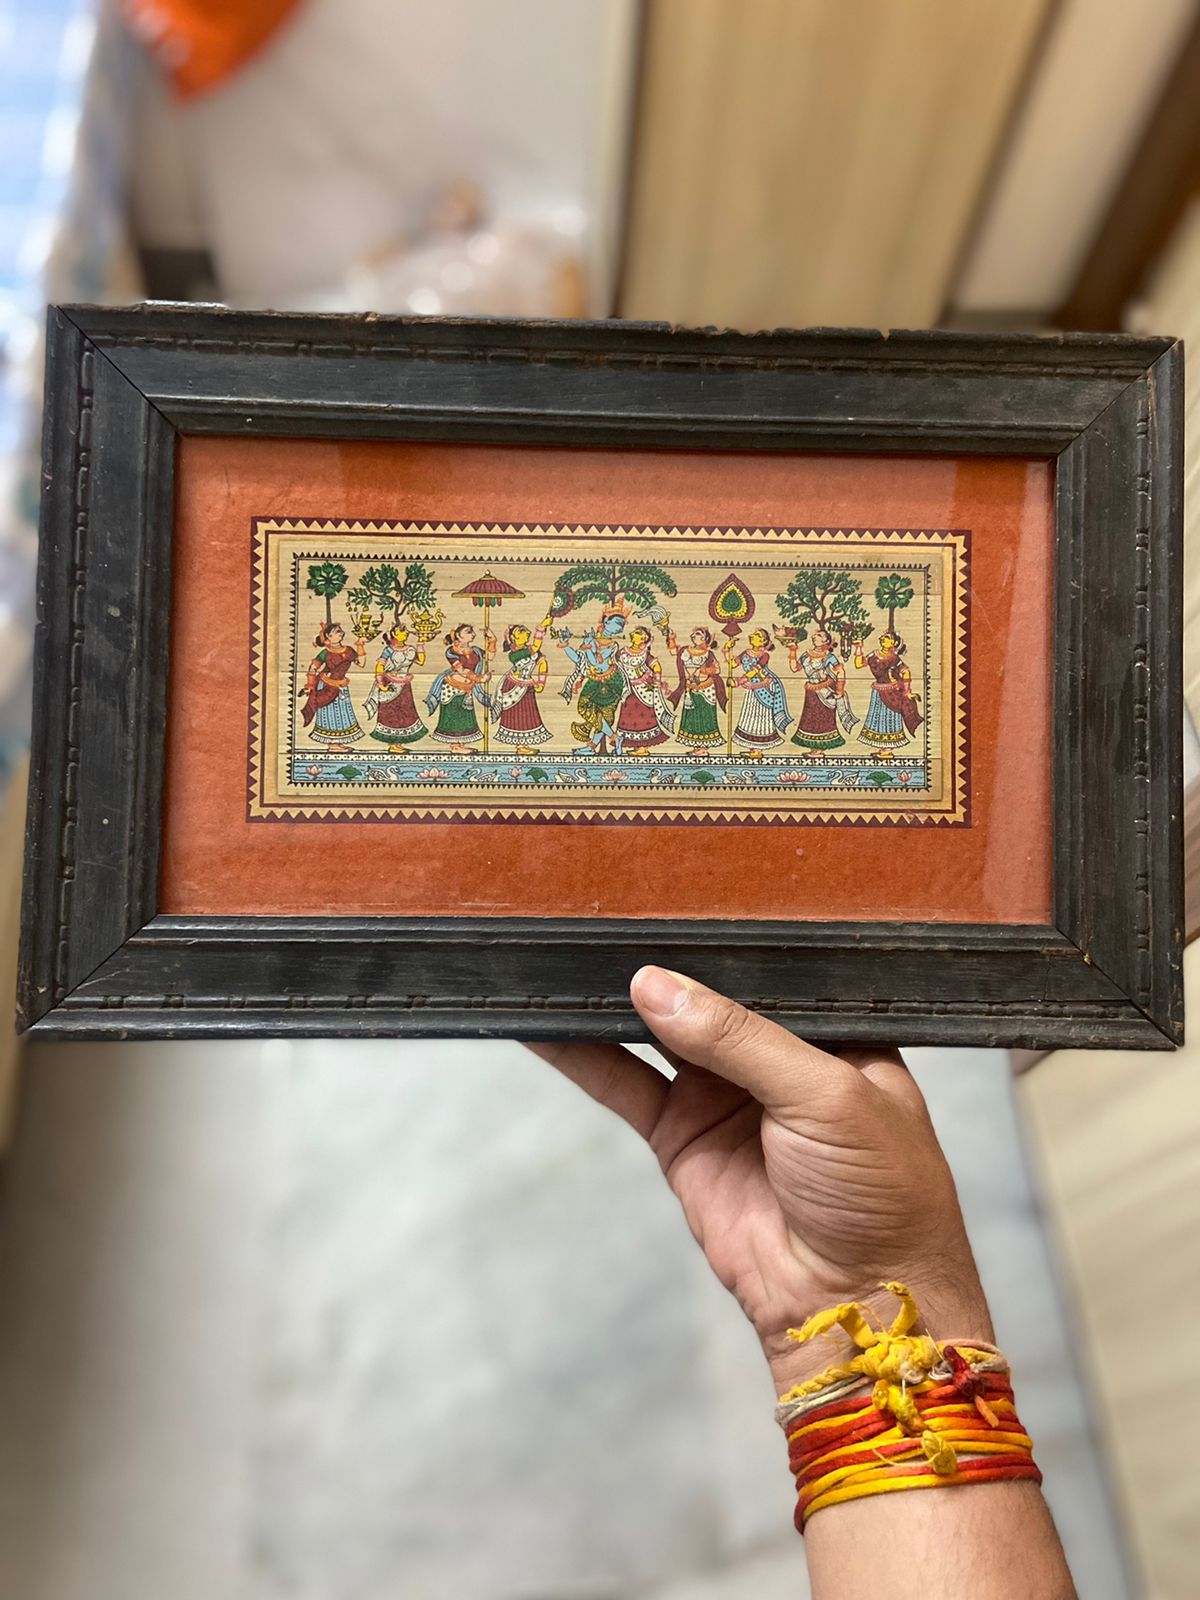 Vintage Krishna leela, RaasLeela, Home decor, Wall decor, Wall hanging painitng, Decorative, Gift to newly wed couple - KhatiJi